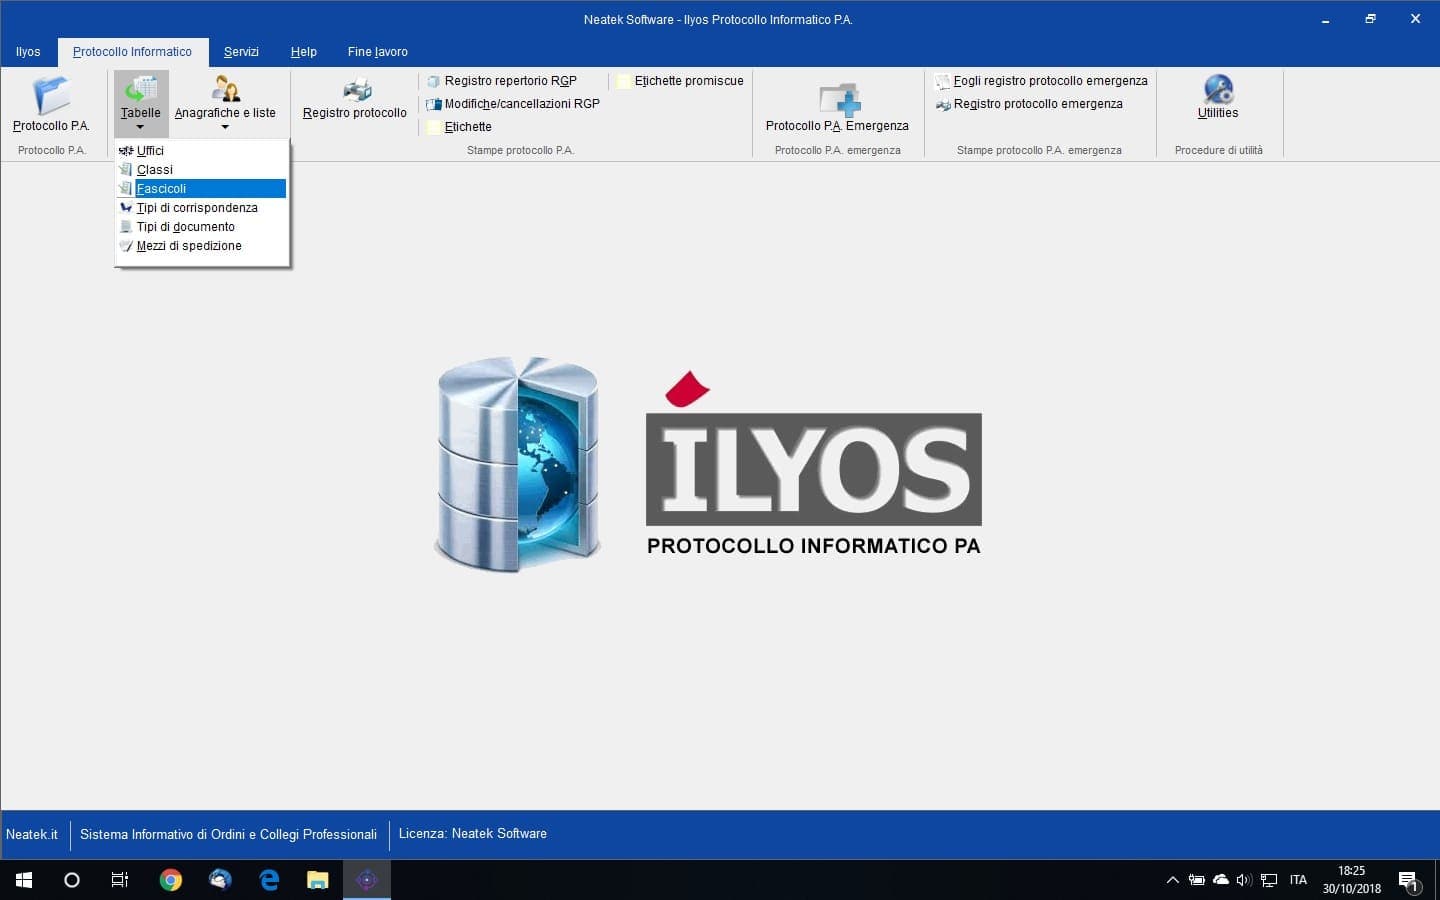 Ilyos Protocollo Informatico PA